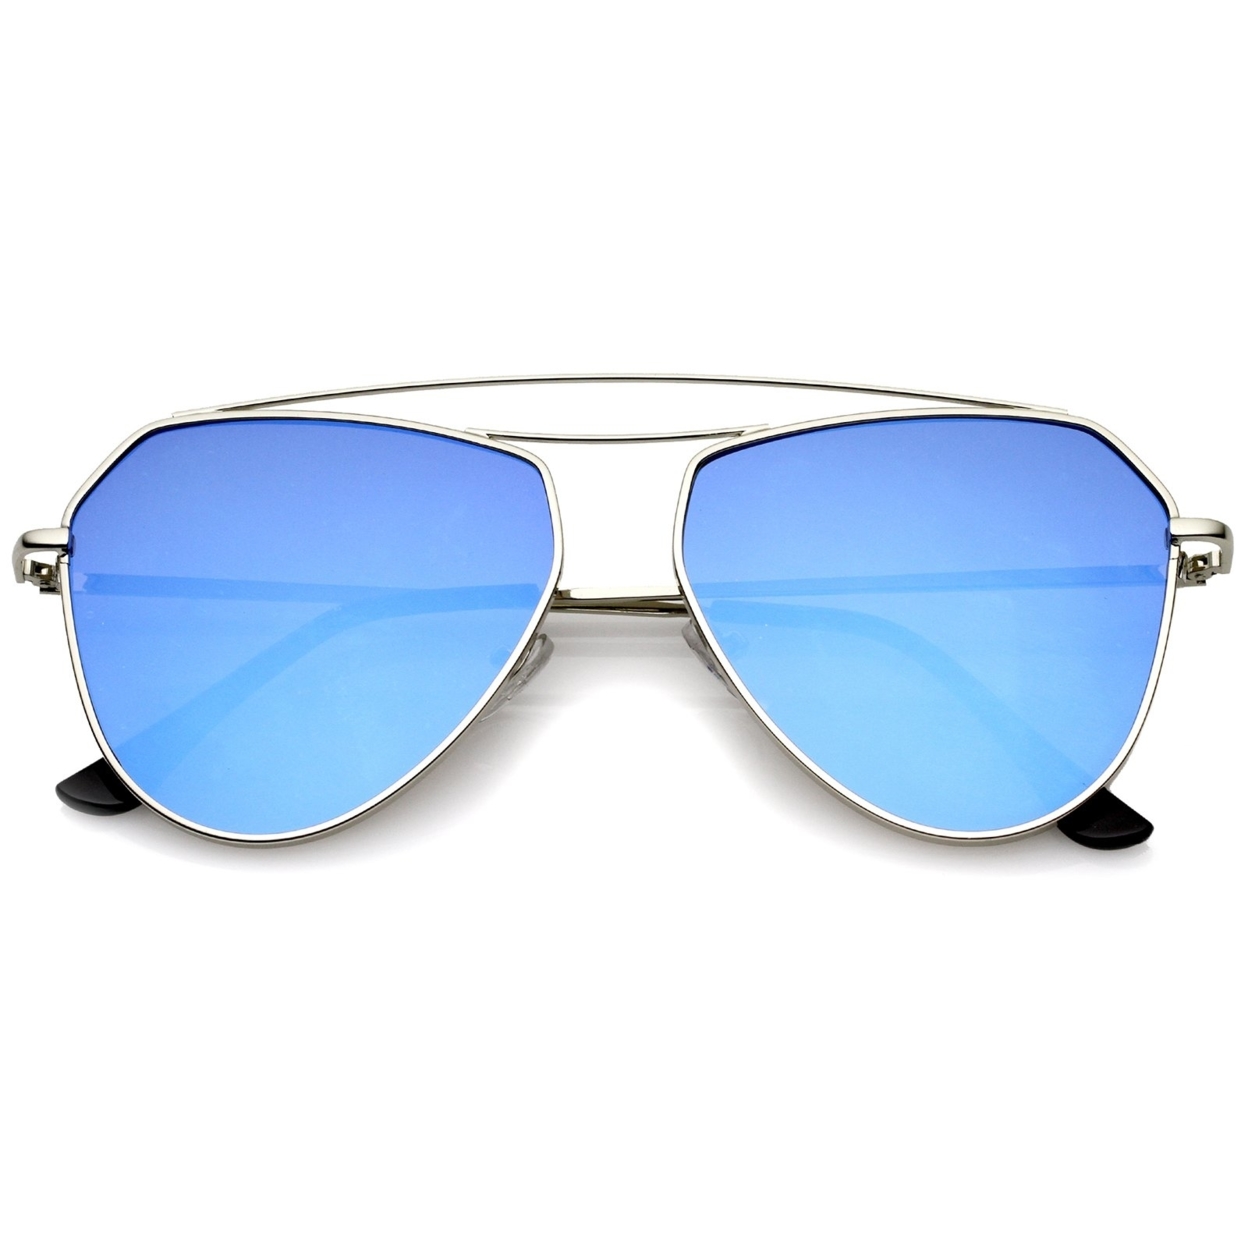 Modern Metal Frame Double Bridge Colored Mirror Flat Lens Aviator Sunglasses 52mm - Silver / Green Mirror